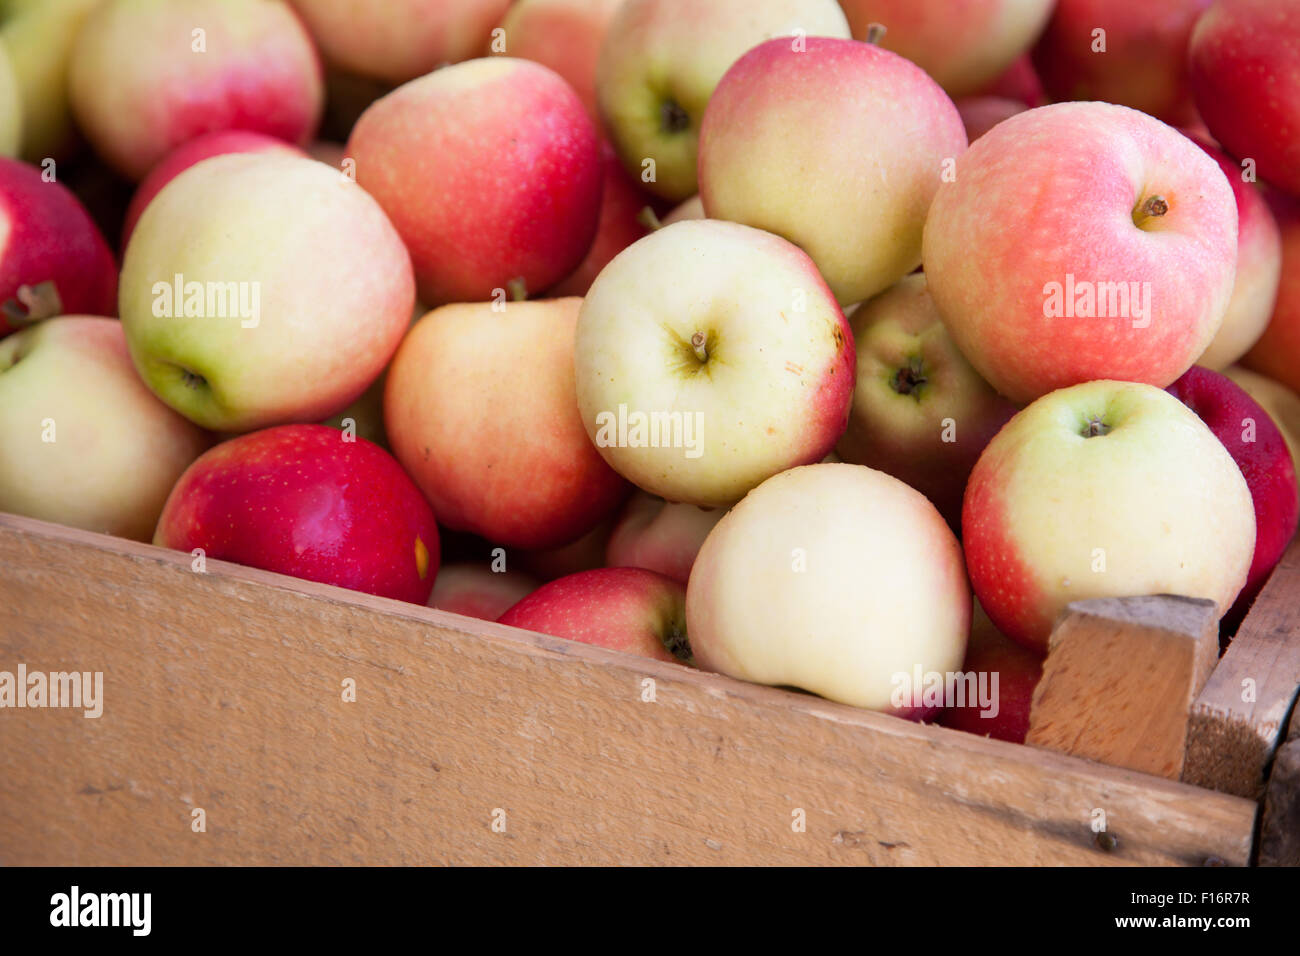 Box full of fine ripe apples Stock Photo